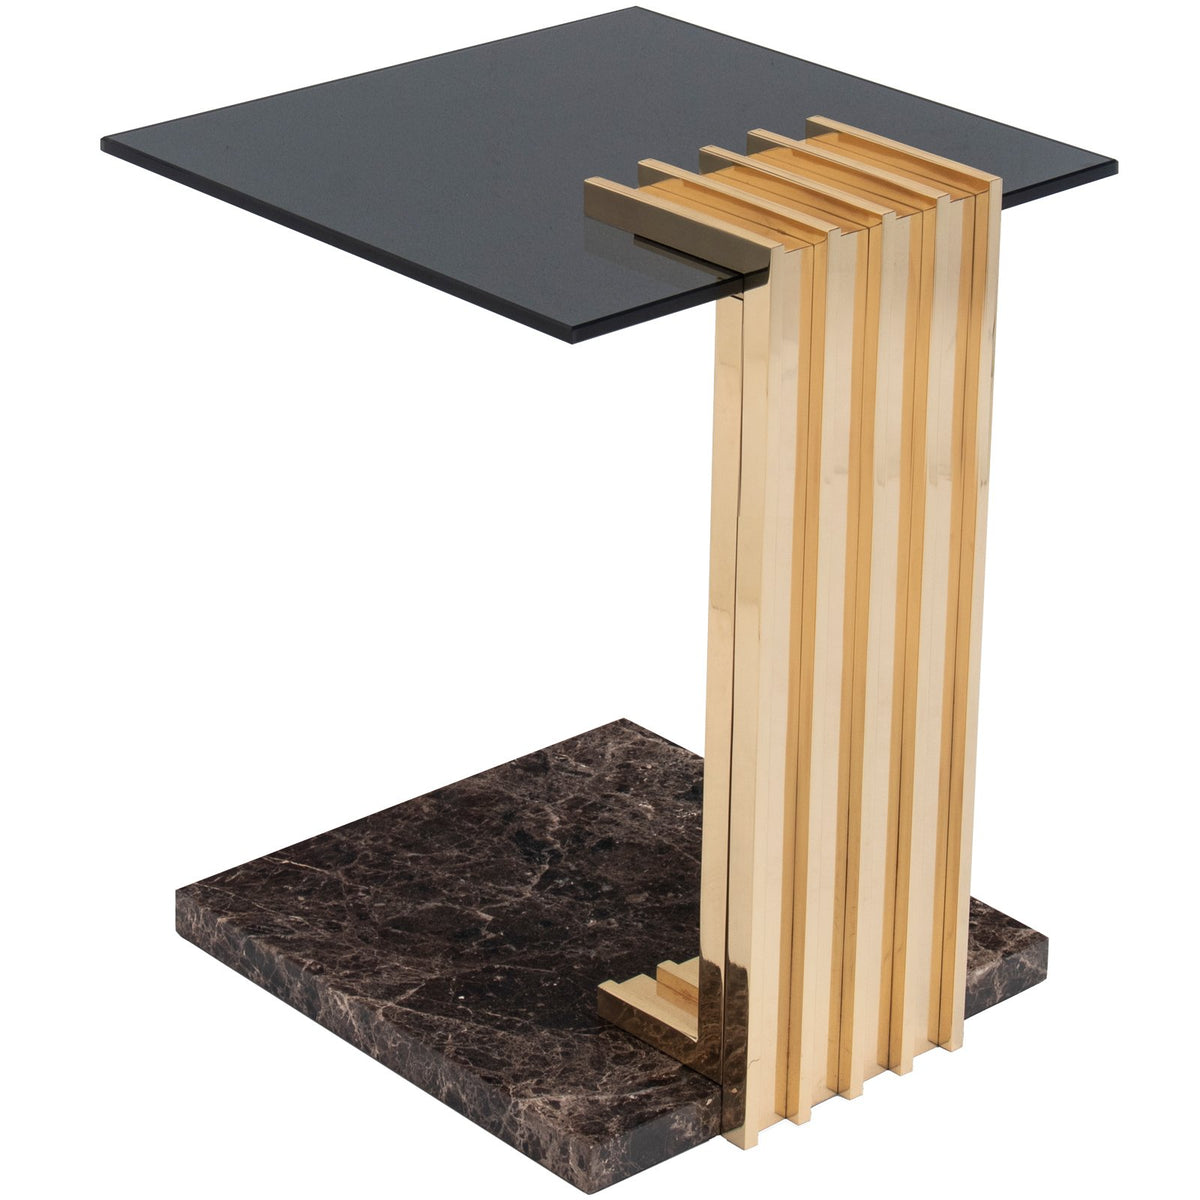 Vertigo Side Table